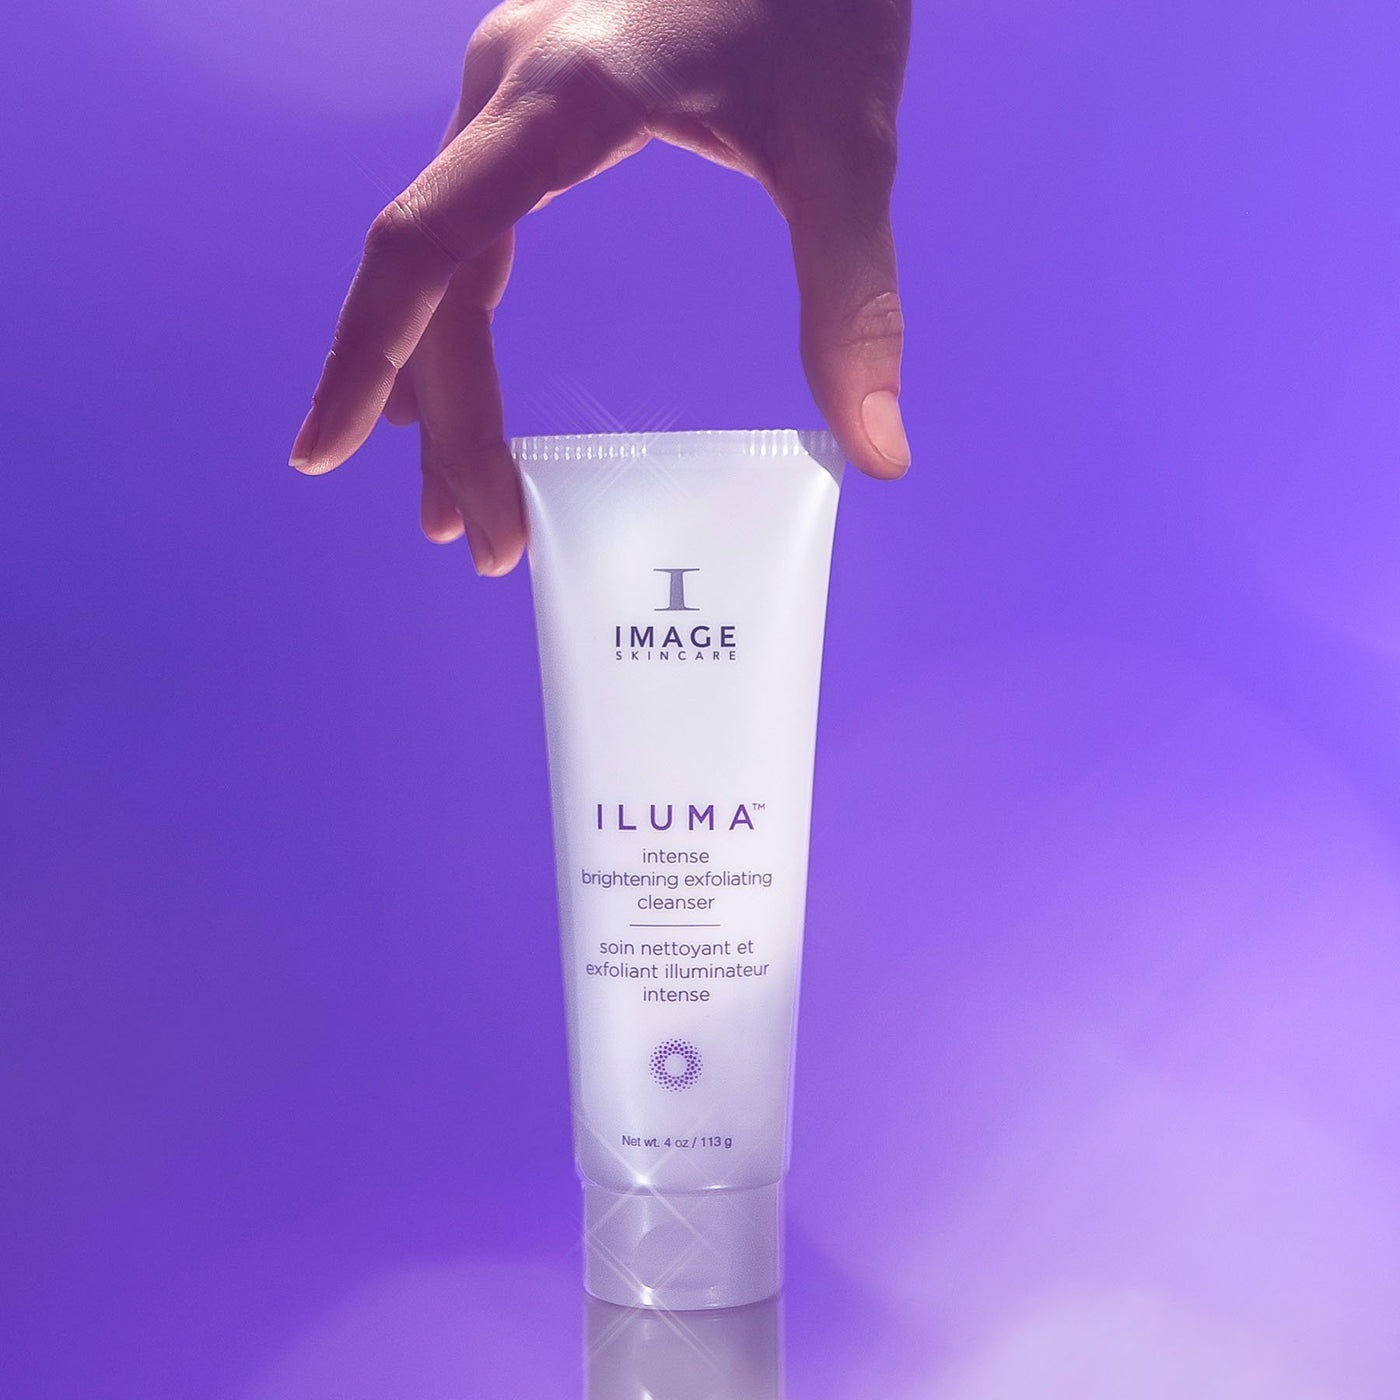 ILUMA intense brightening exfoliating cleanser - The Skin Beauty Shoppe